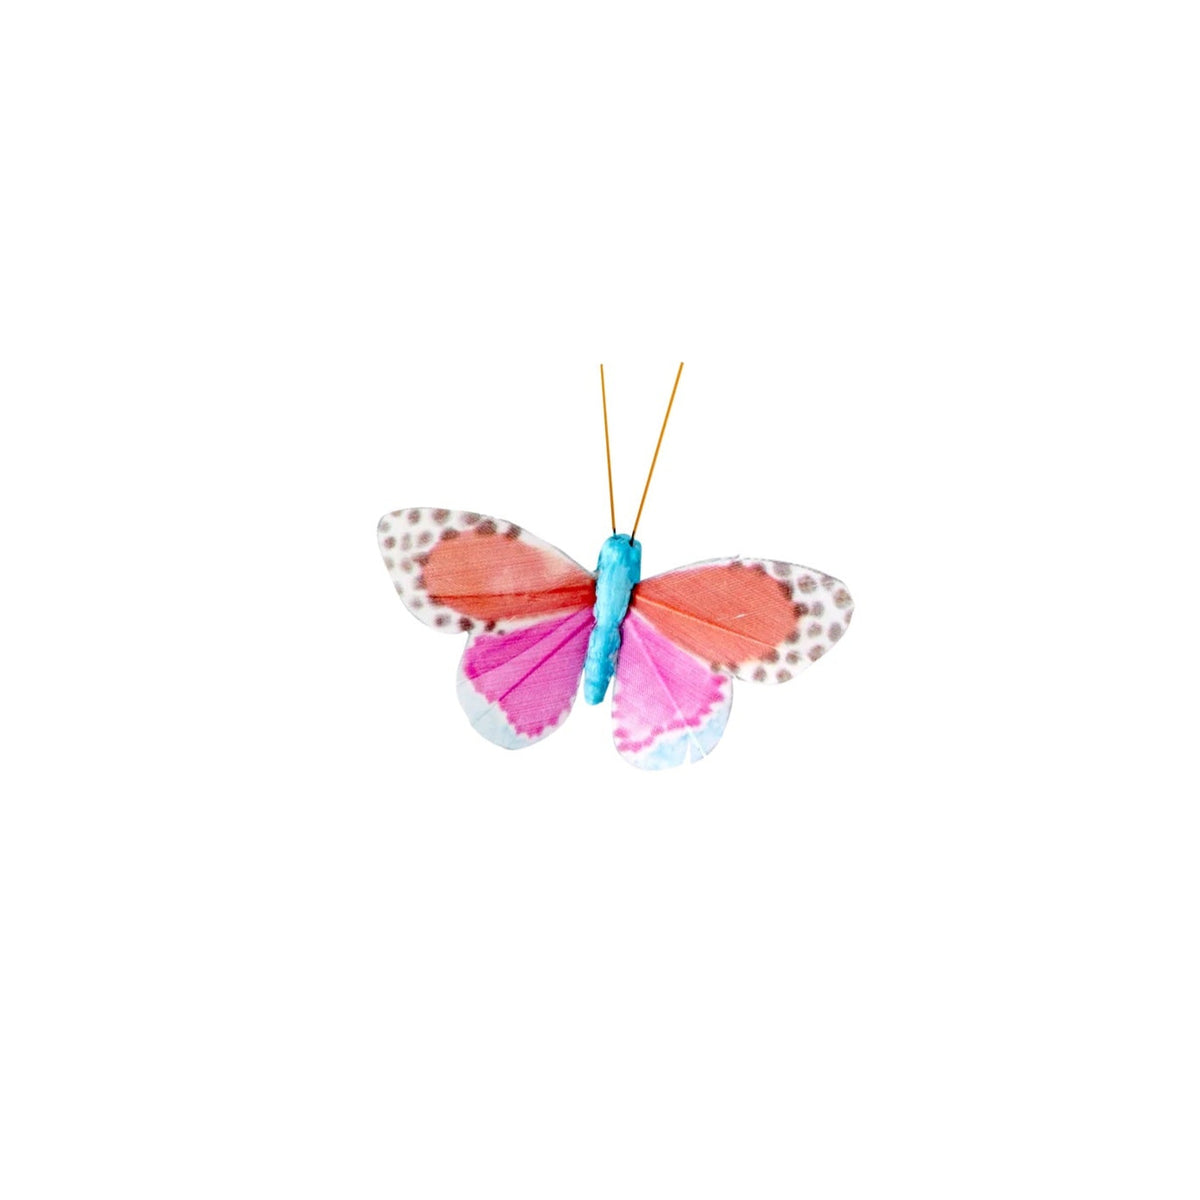 Deko-sommerfugl med orange/pink · Sommerfugl på klip fra Rice · Niedziella & Friends (8354743615833) (8354754953561) (8354755707225)